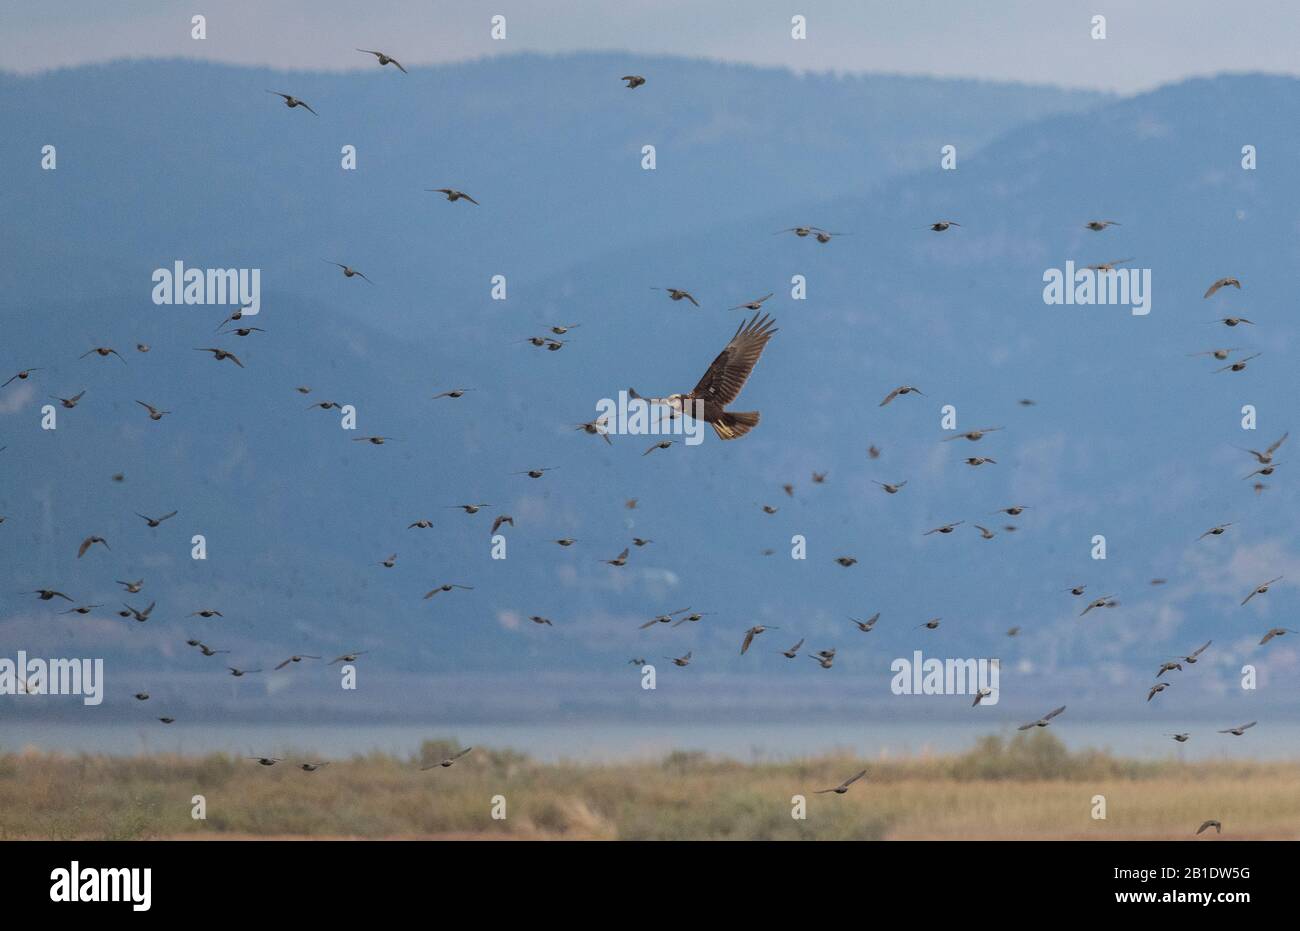 Female Marsh harrier, Circus aeruginosus, in flight among flock of starlings. Stock Photo